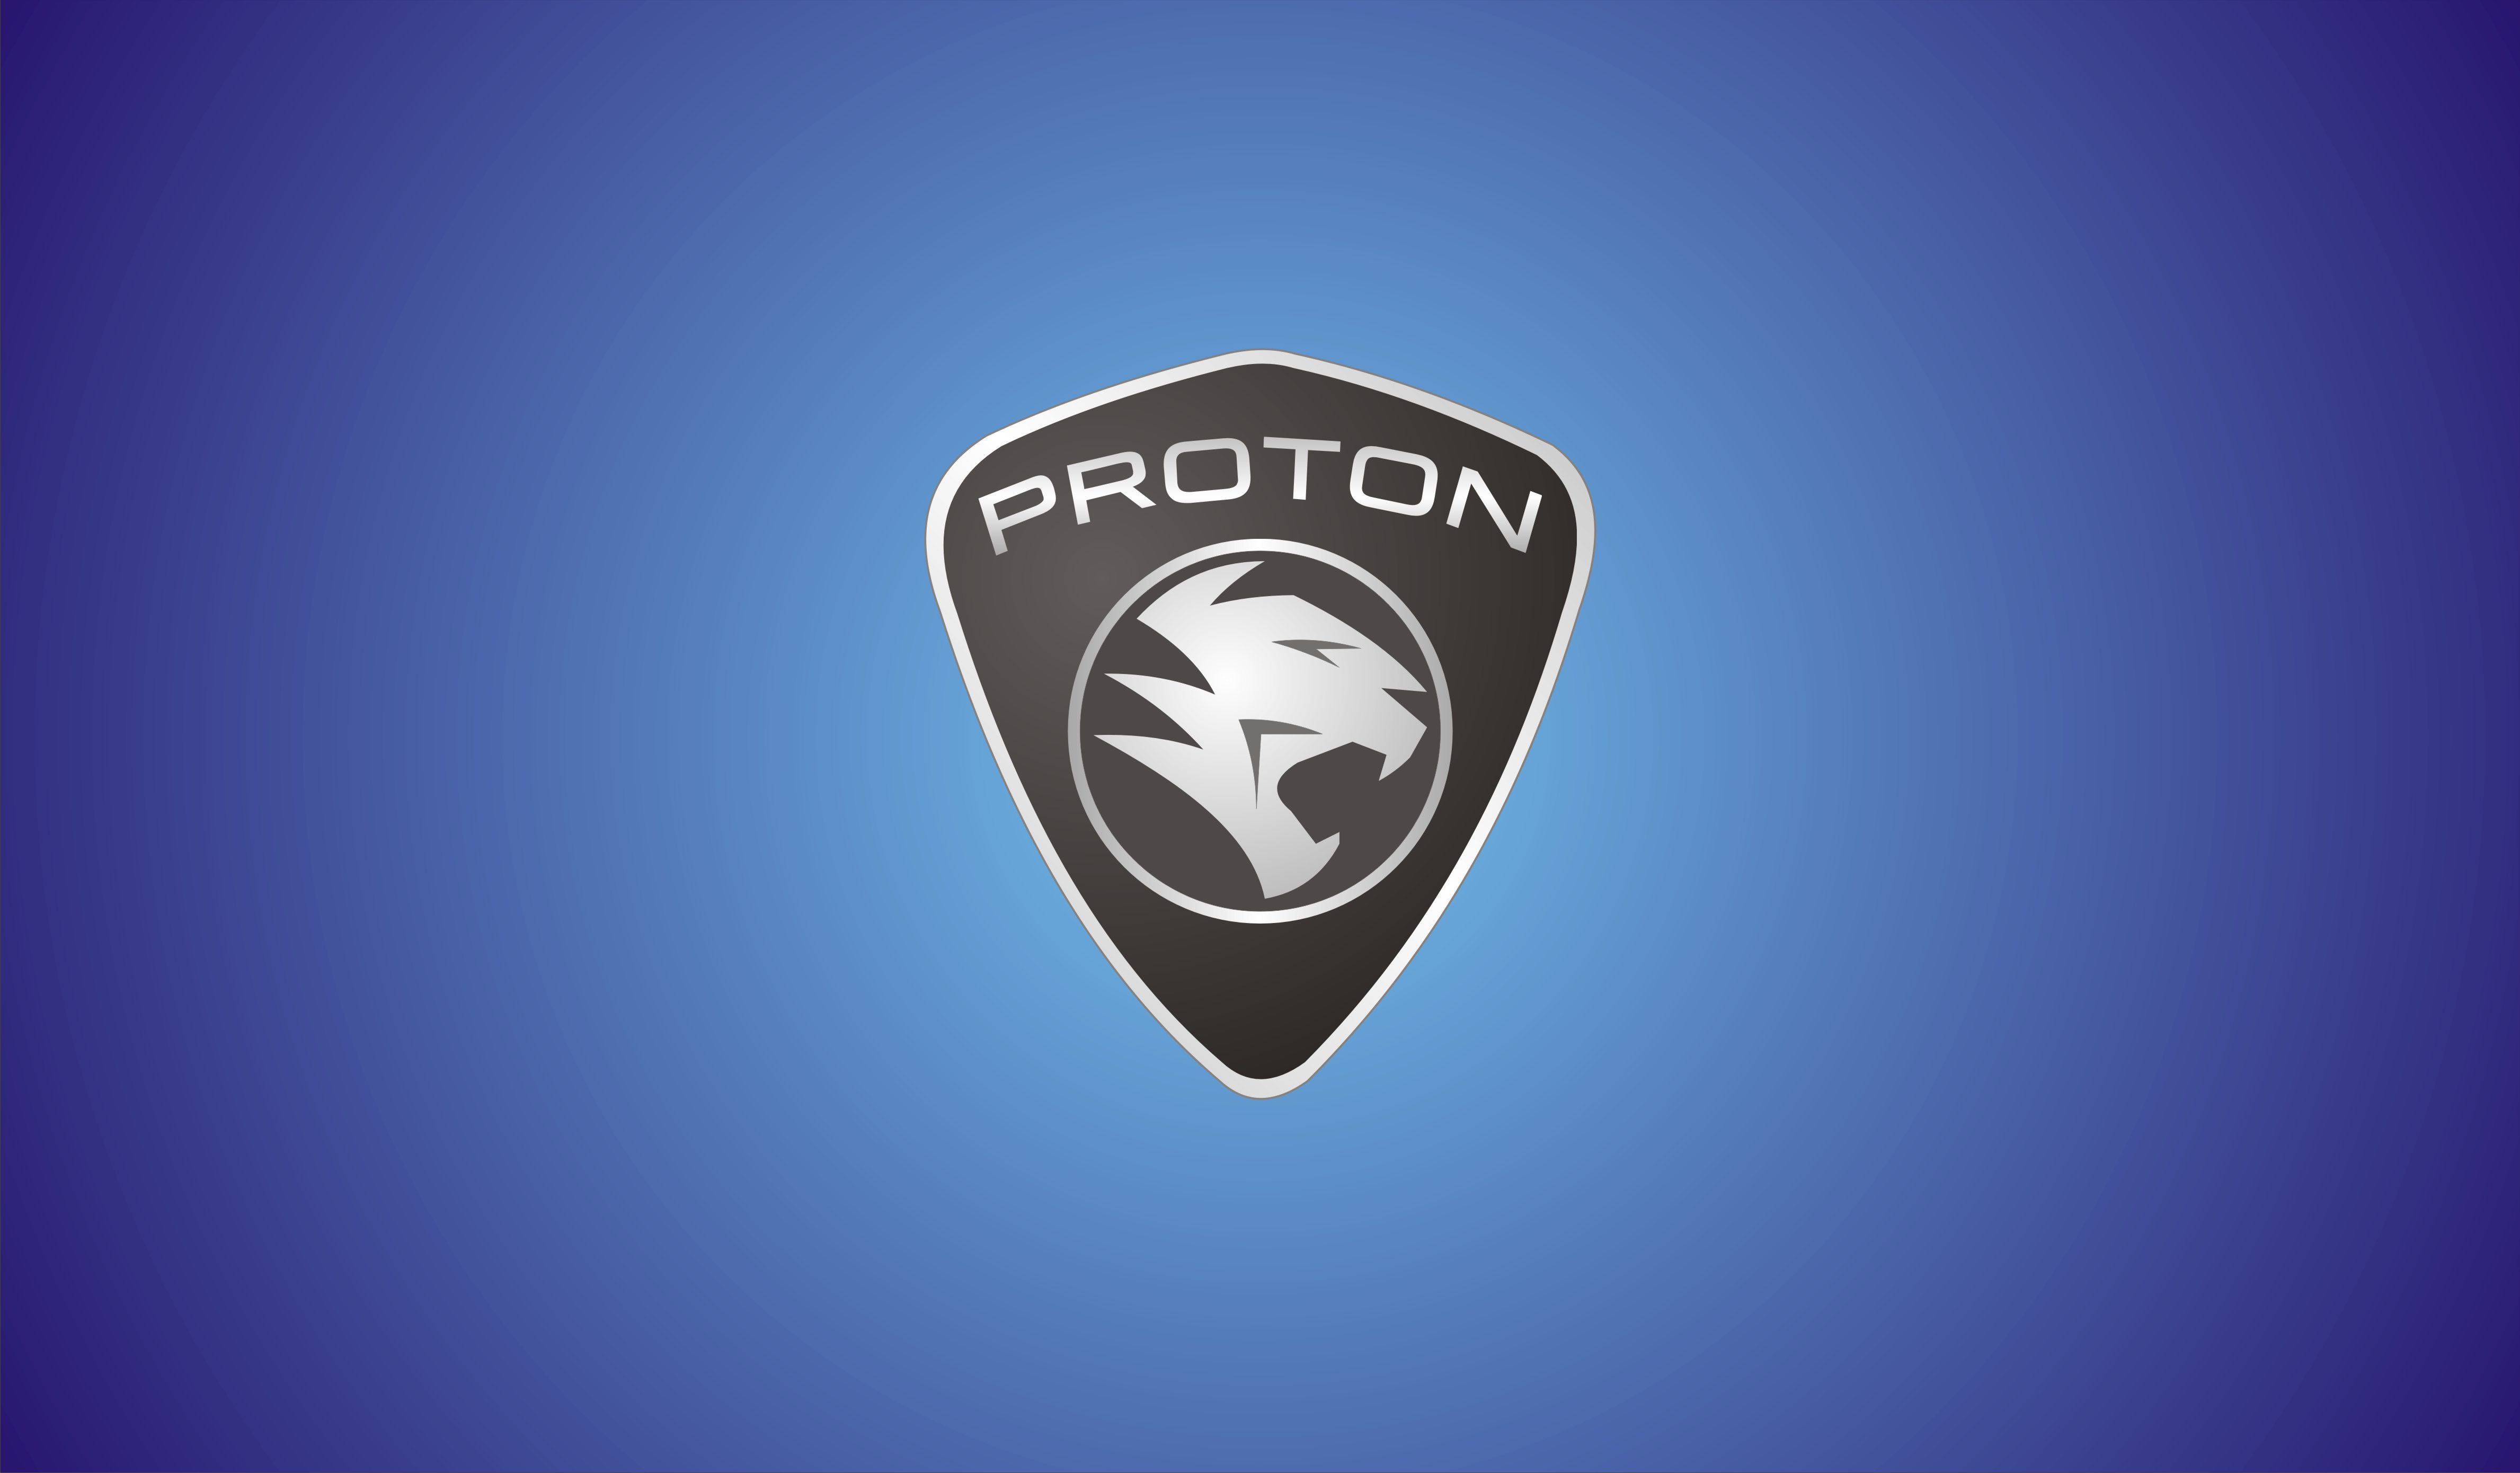 Proton HD Wallpaper Background Image